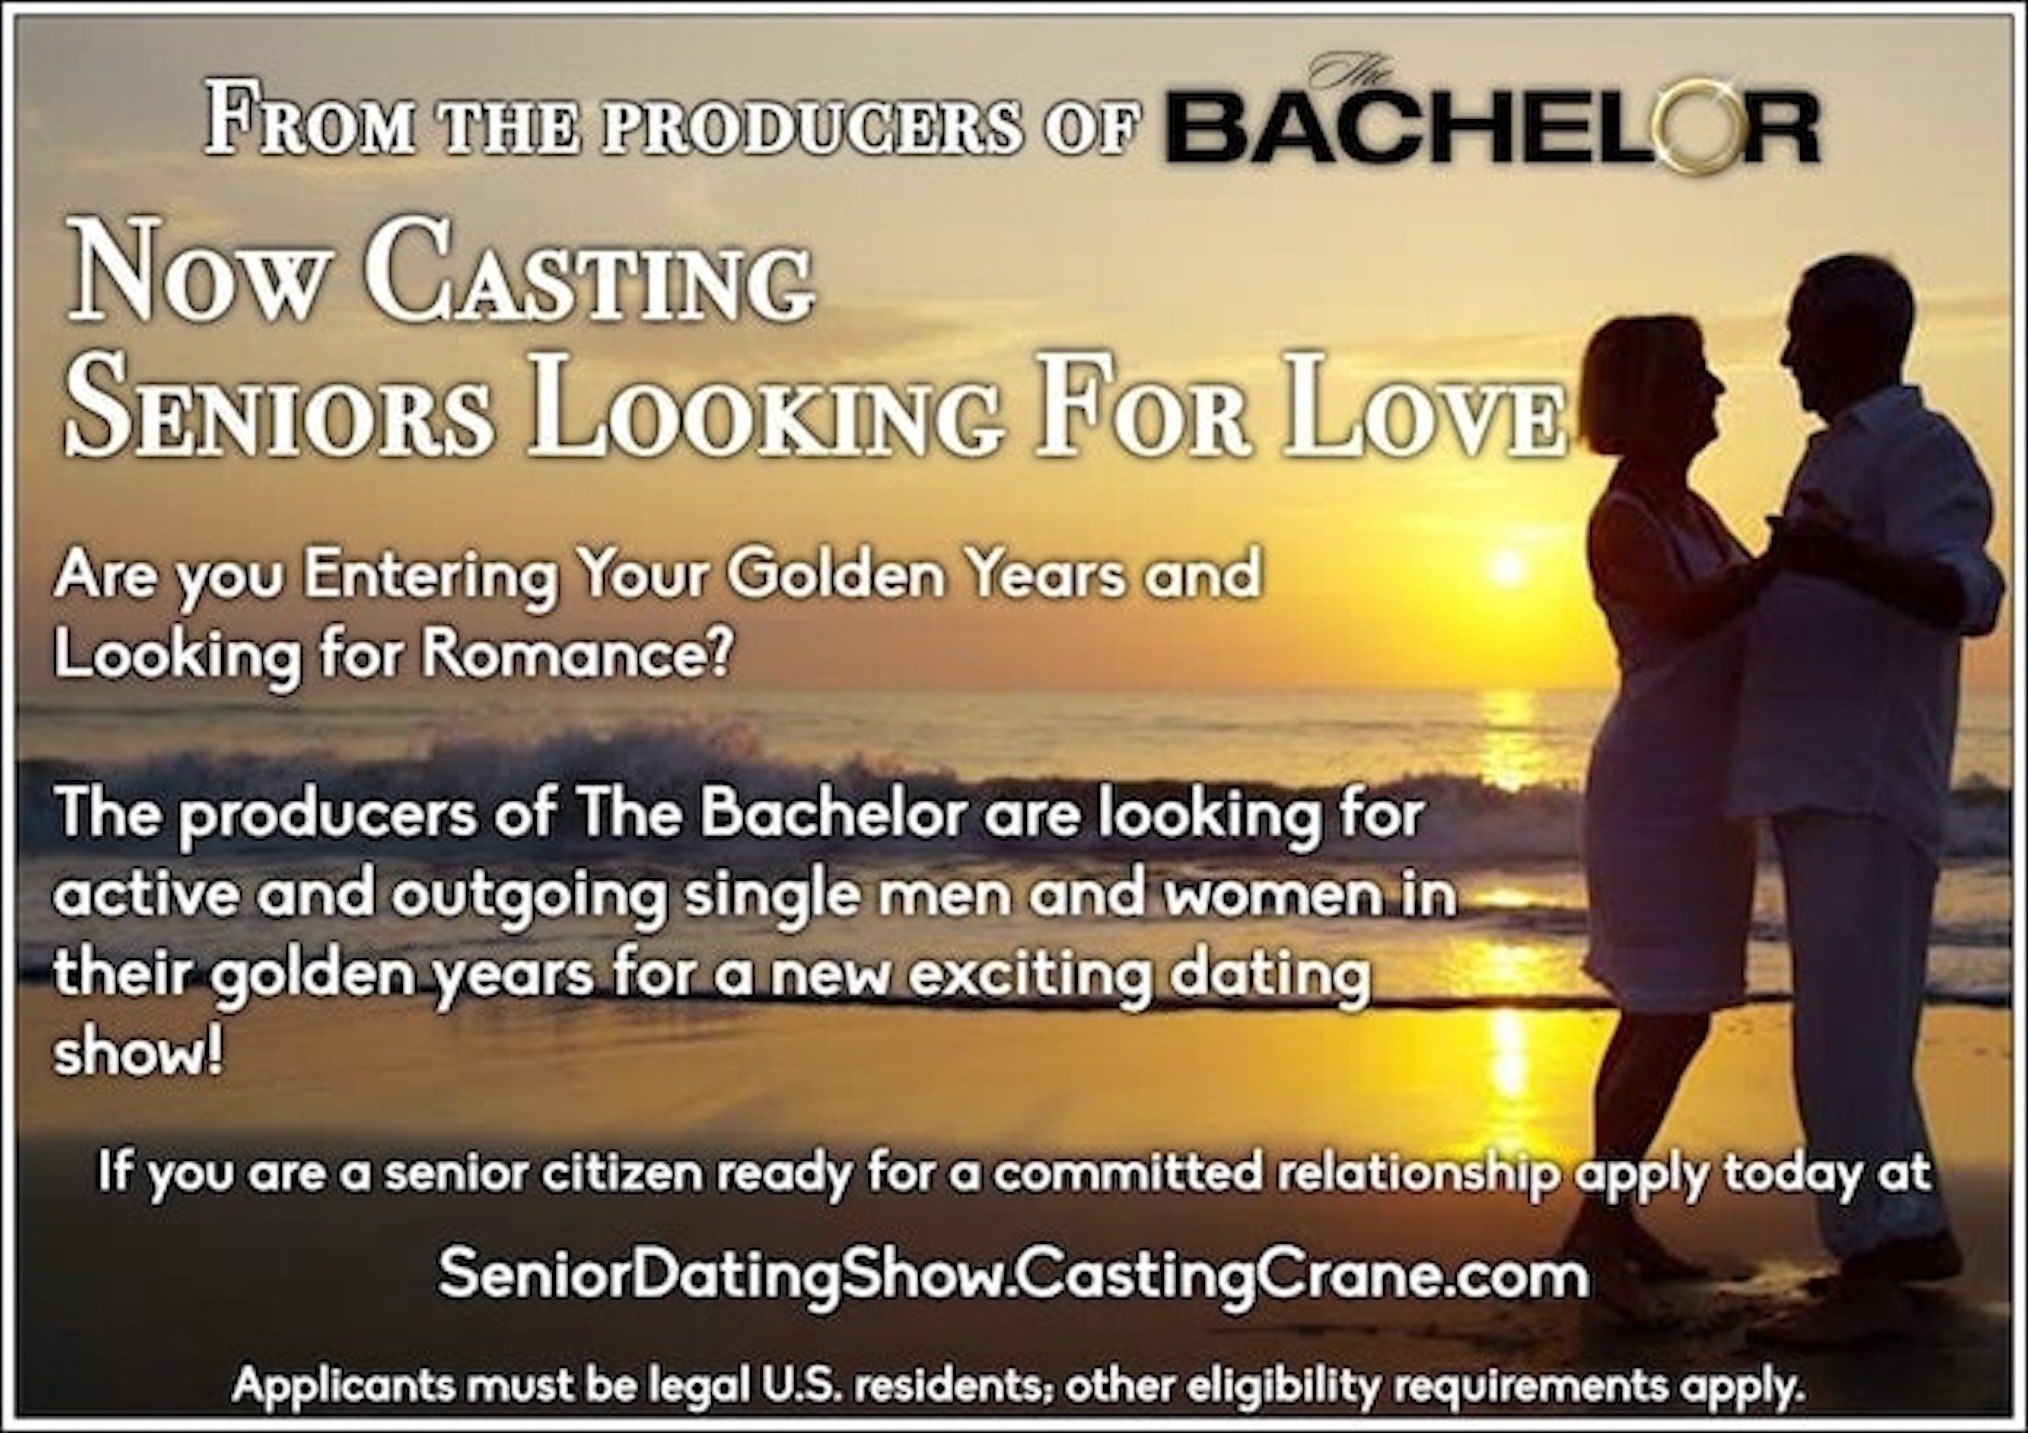 Senior Bachelor casting call